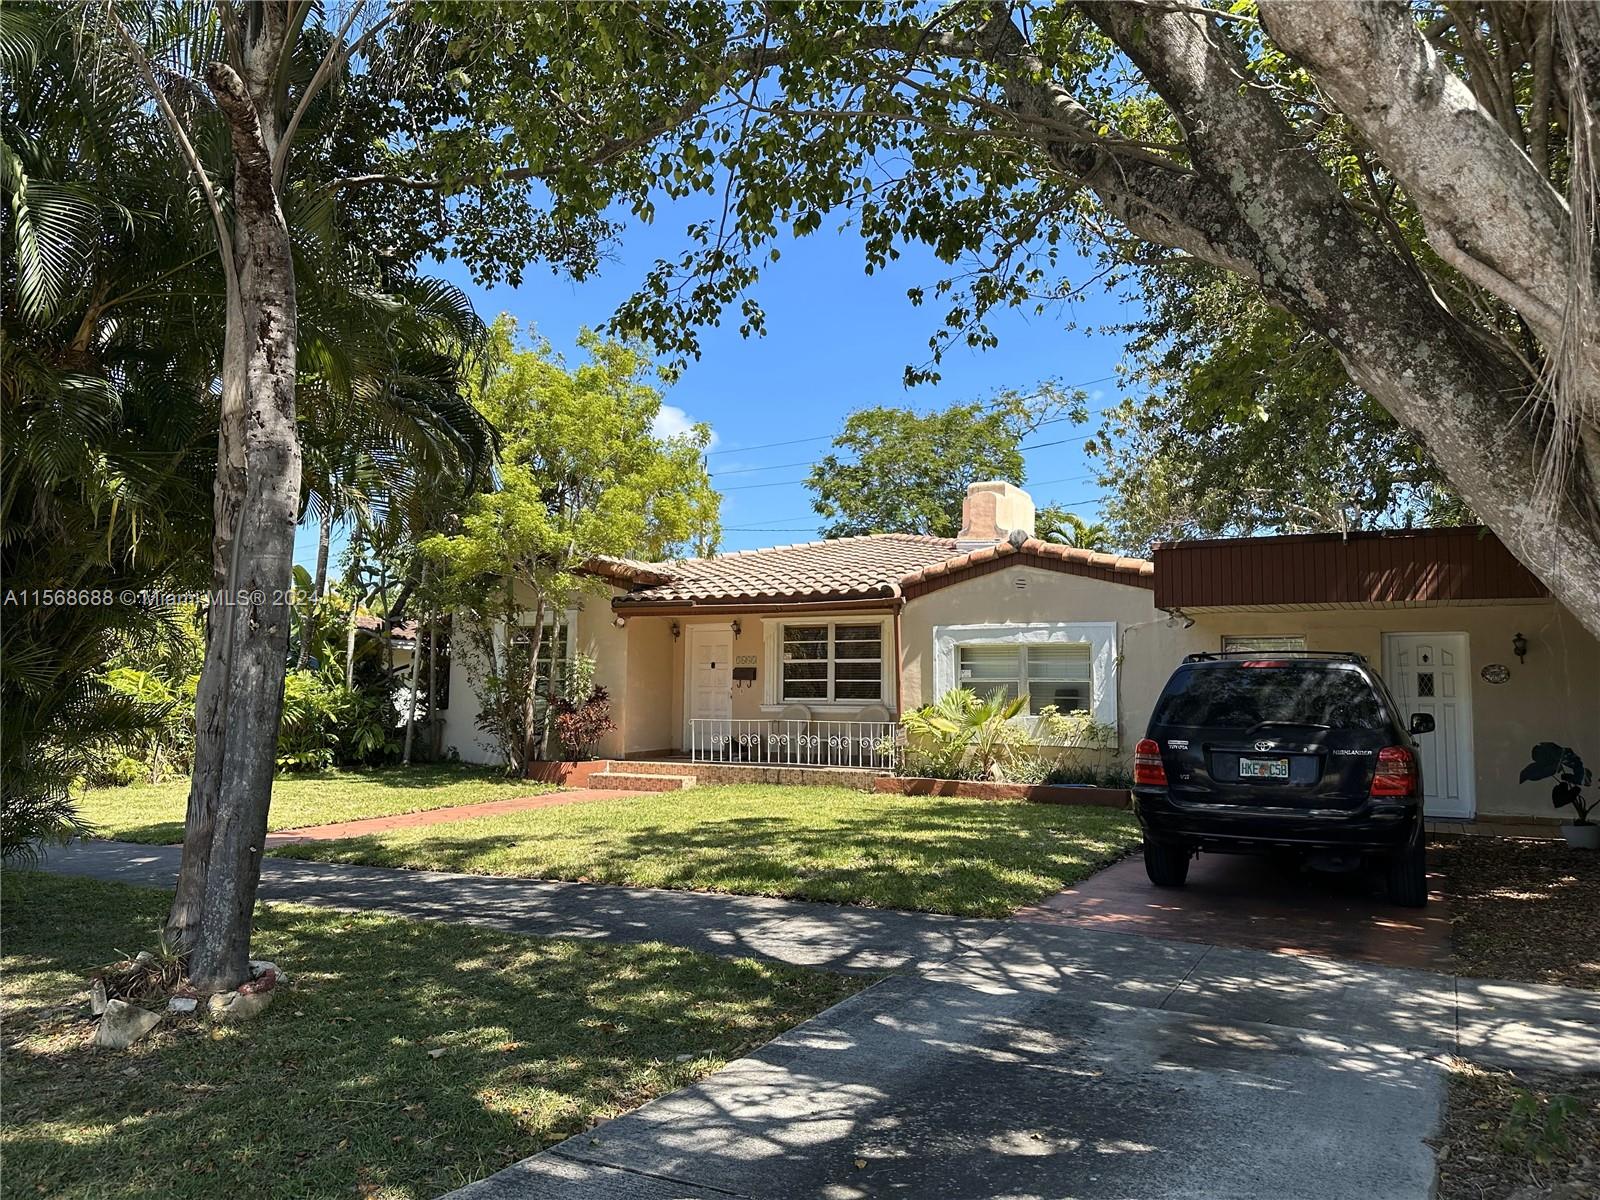 Rental Property at 3681 Sw 3rd Ave, Miami, Broward County, Florida -  - $885,000 MO.